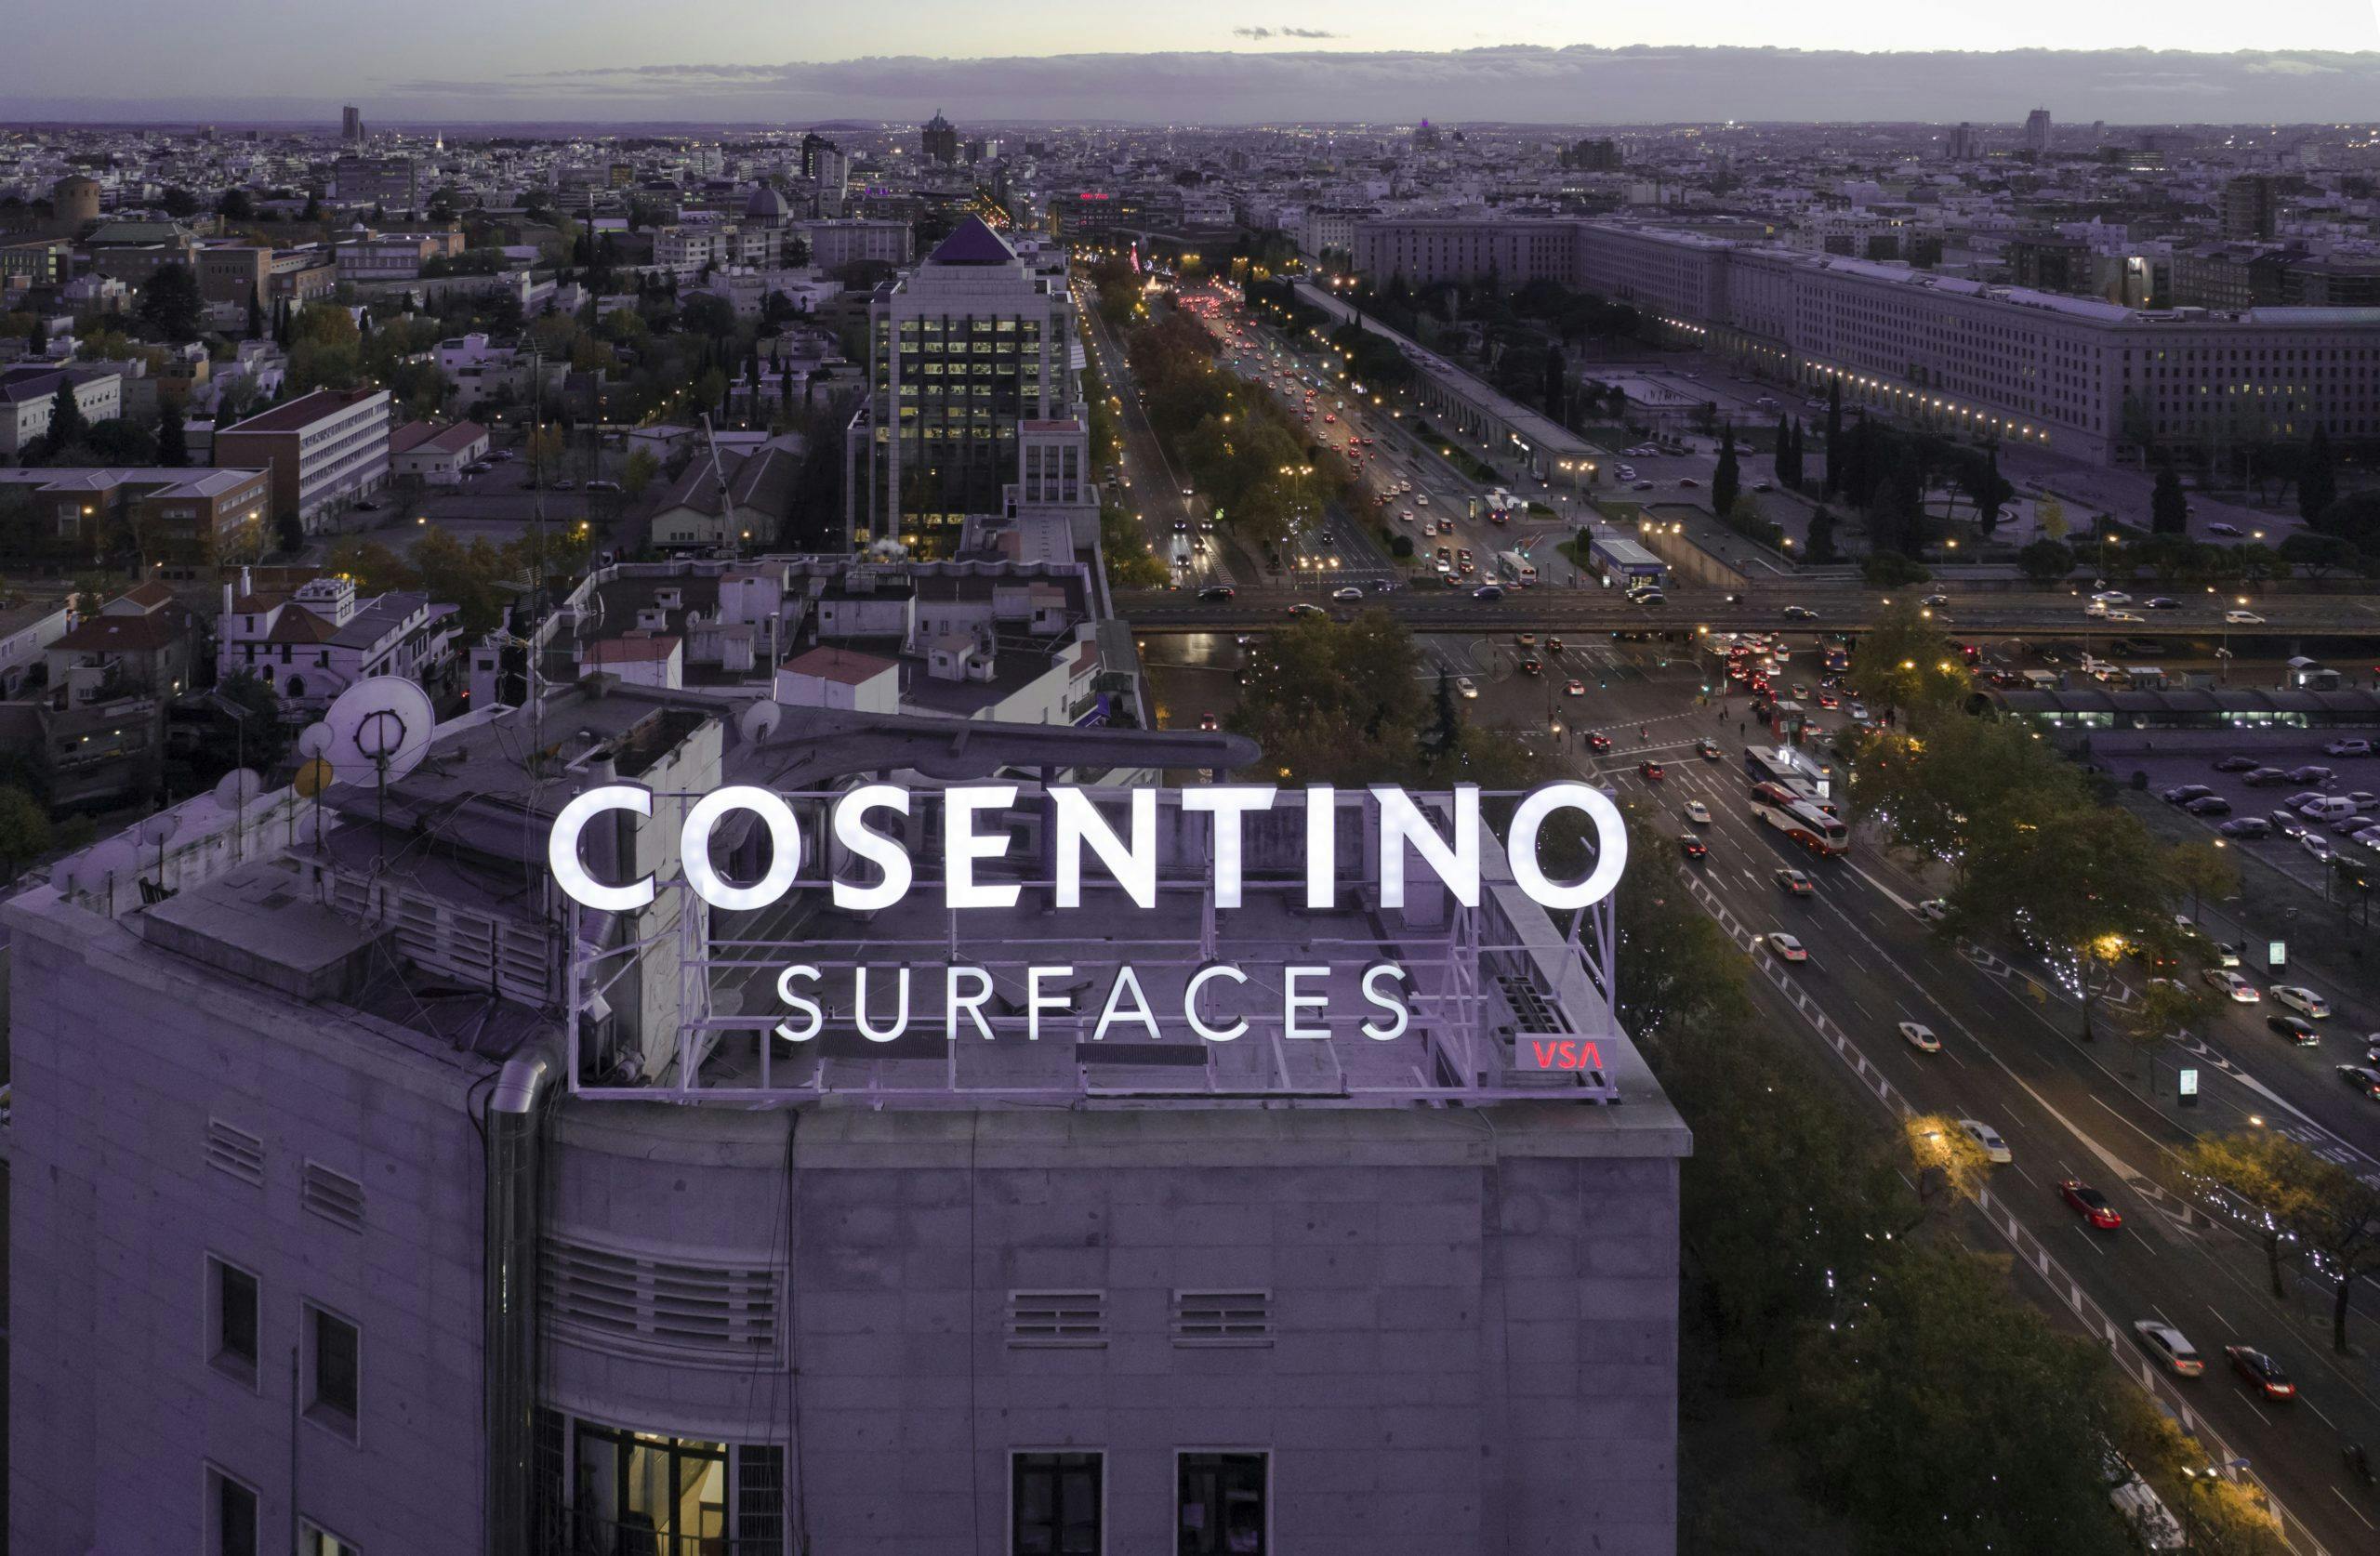 Cosentino City Madrid celebrates its first anniversary